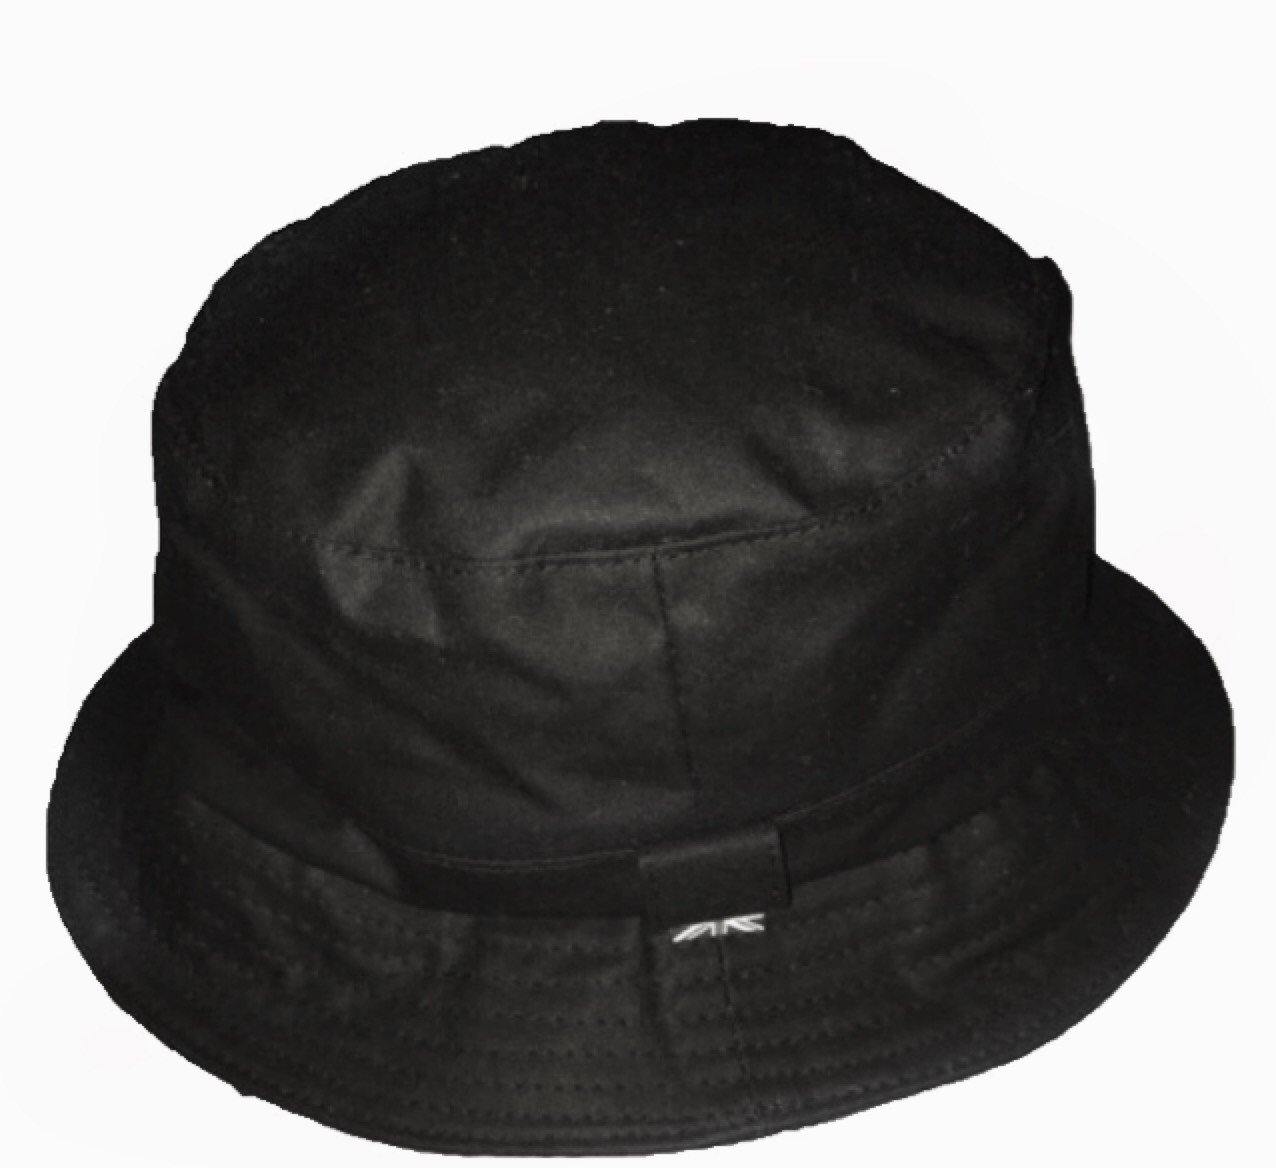 Waterproof Unisex Wax Cotton Bucket Hat Made in UK - Free Life's Love